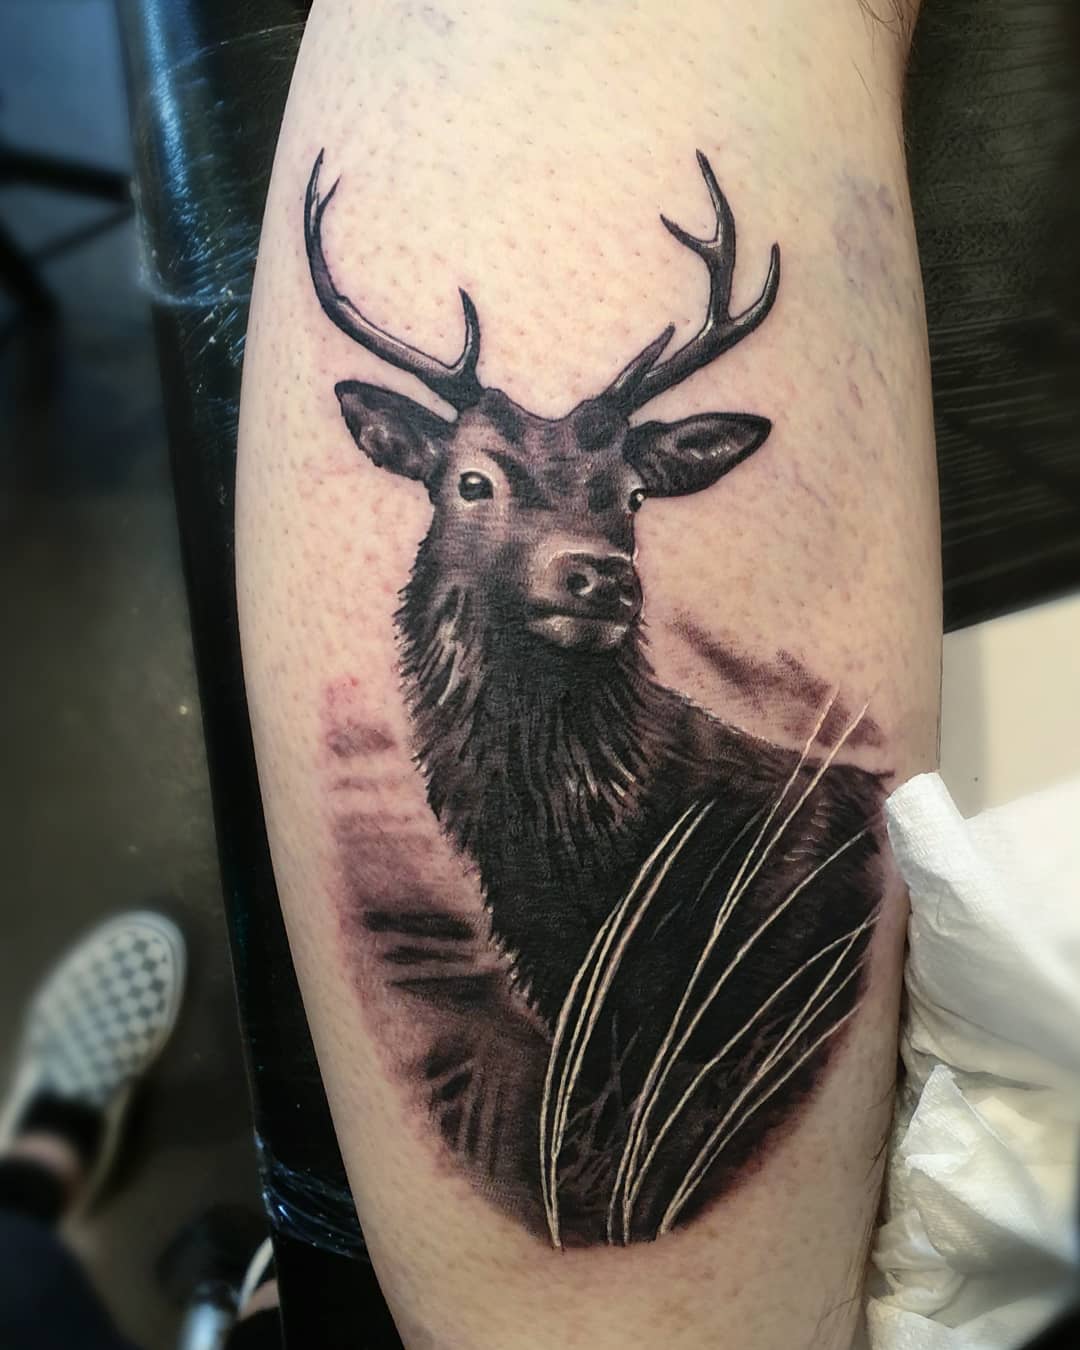 Tattoo uploaded by Gareth-Stuart • #geometric #deer #stag #metalurgey  #dundee #scotland #forearm #black • Tattoodo